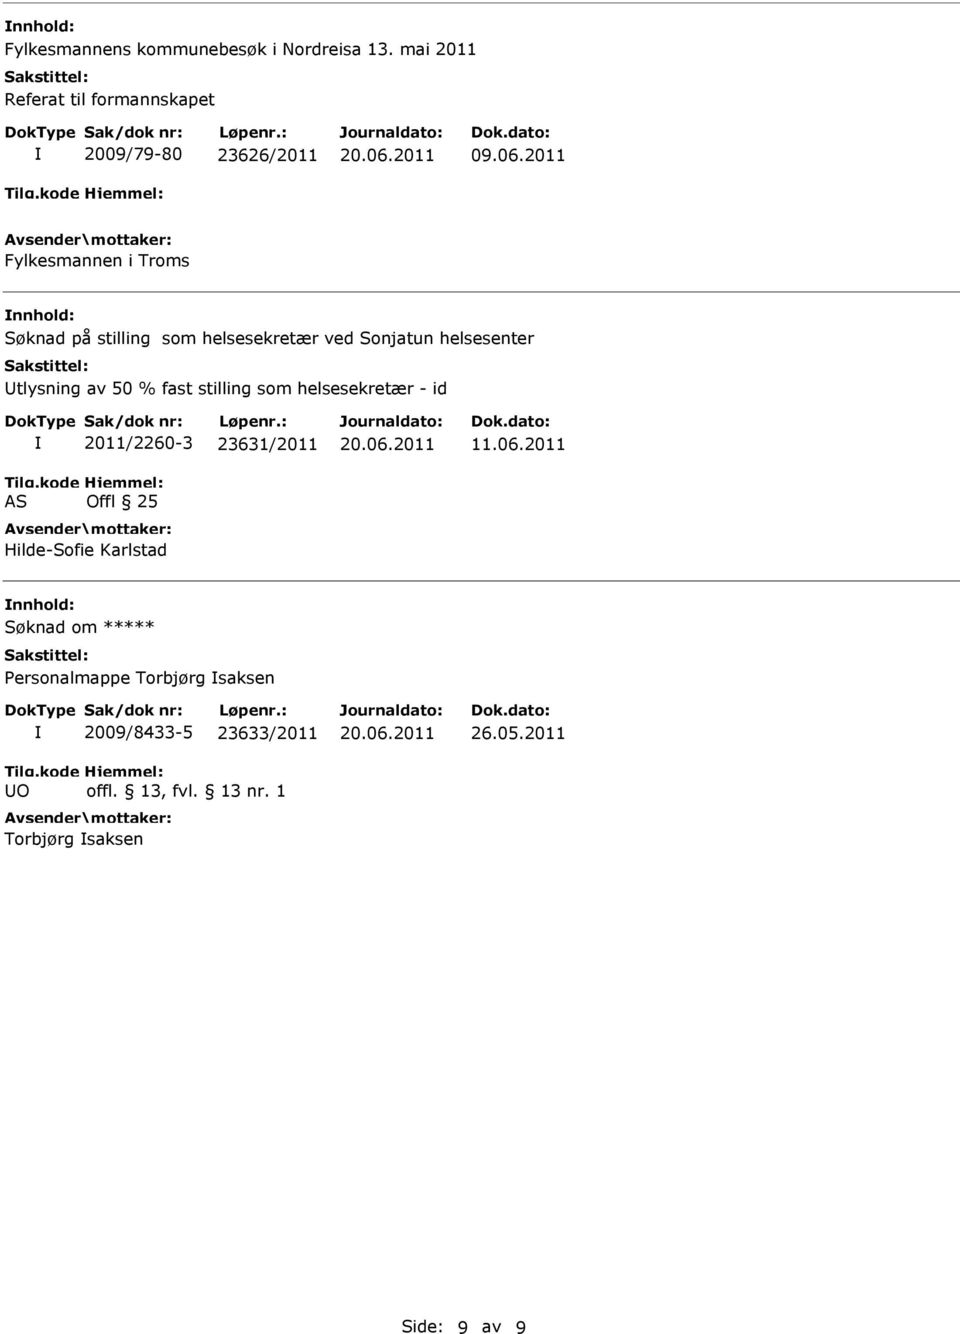 fast stilling som helsesekretær - id AS 2011/2260-3 23631/2011 Offl 25 Hilde-Sofie Karlstad 11.06.